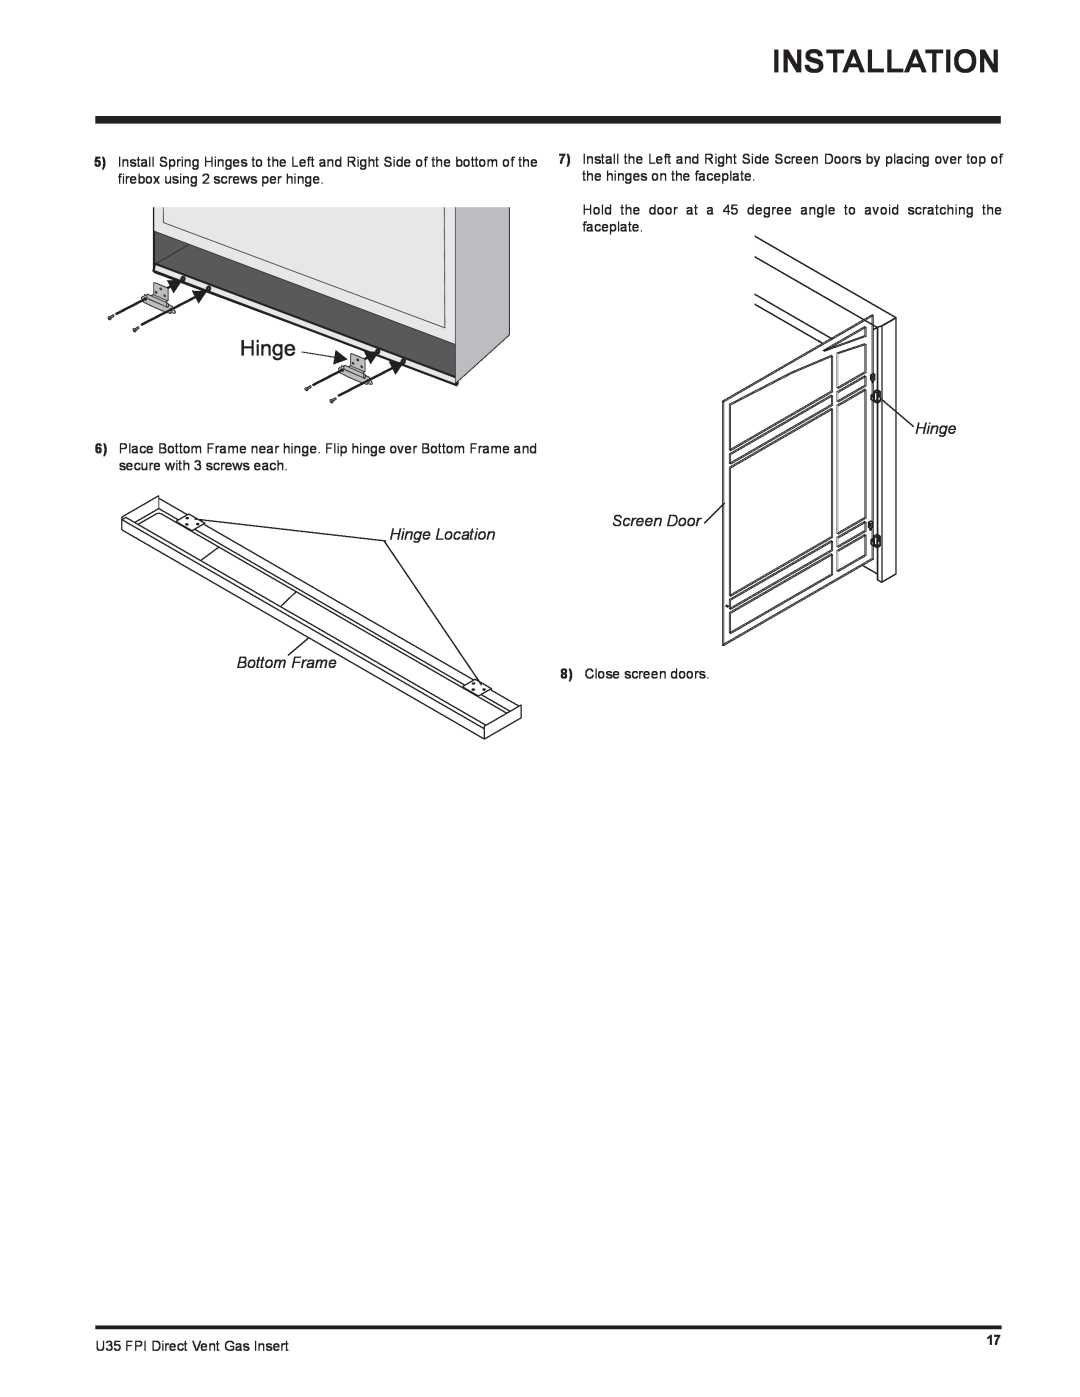 Regency U35-LP1, U35-NG1 installation manual Hinge Location, Screen Door, Bottom Frame 